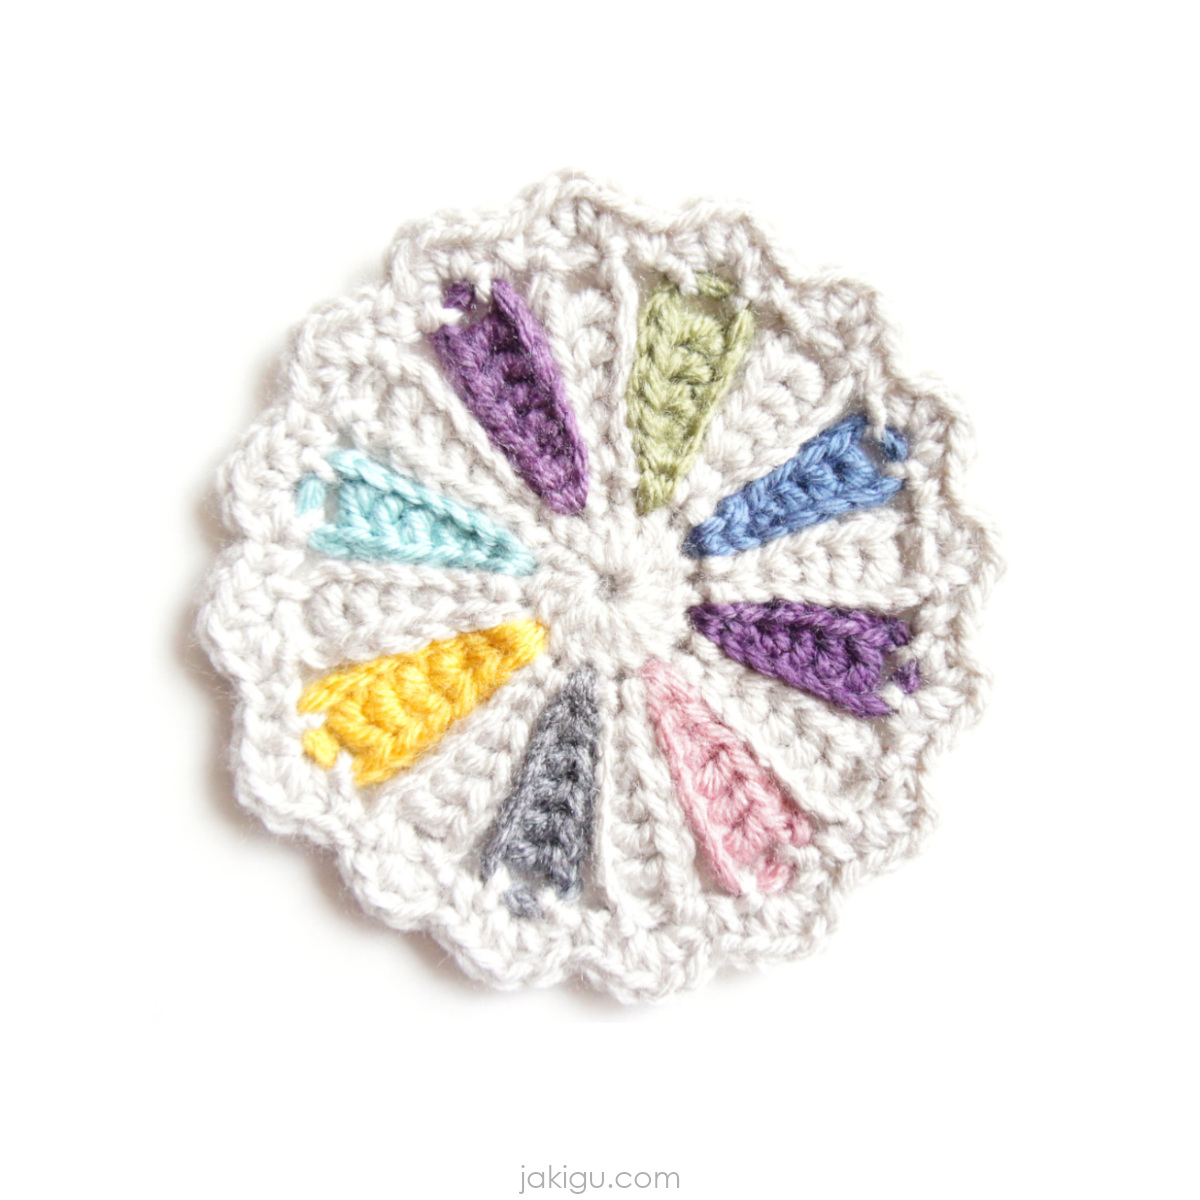 pinwheel coaster crochet pattern | jakigu.com